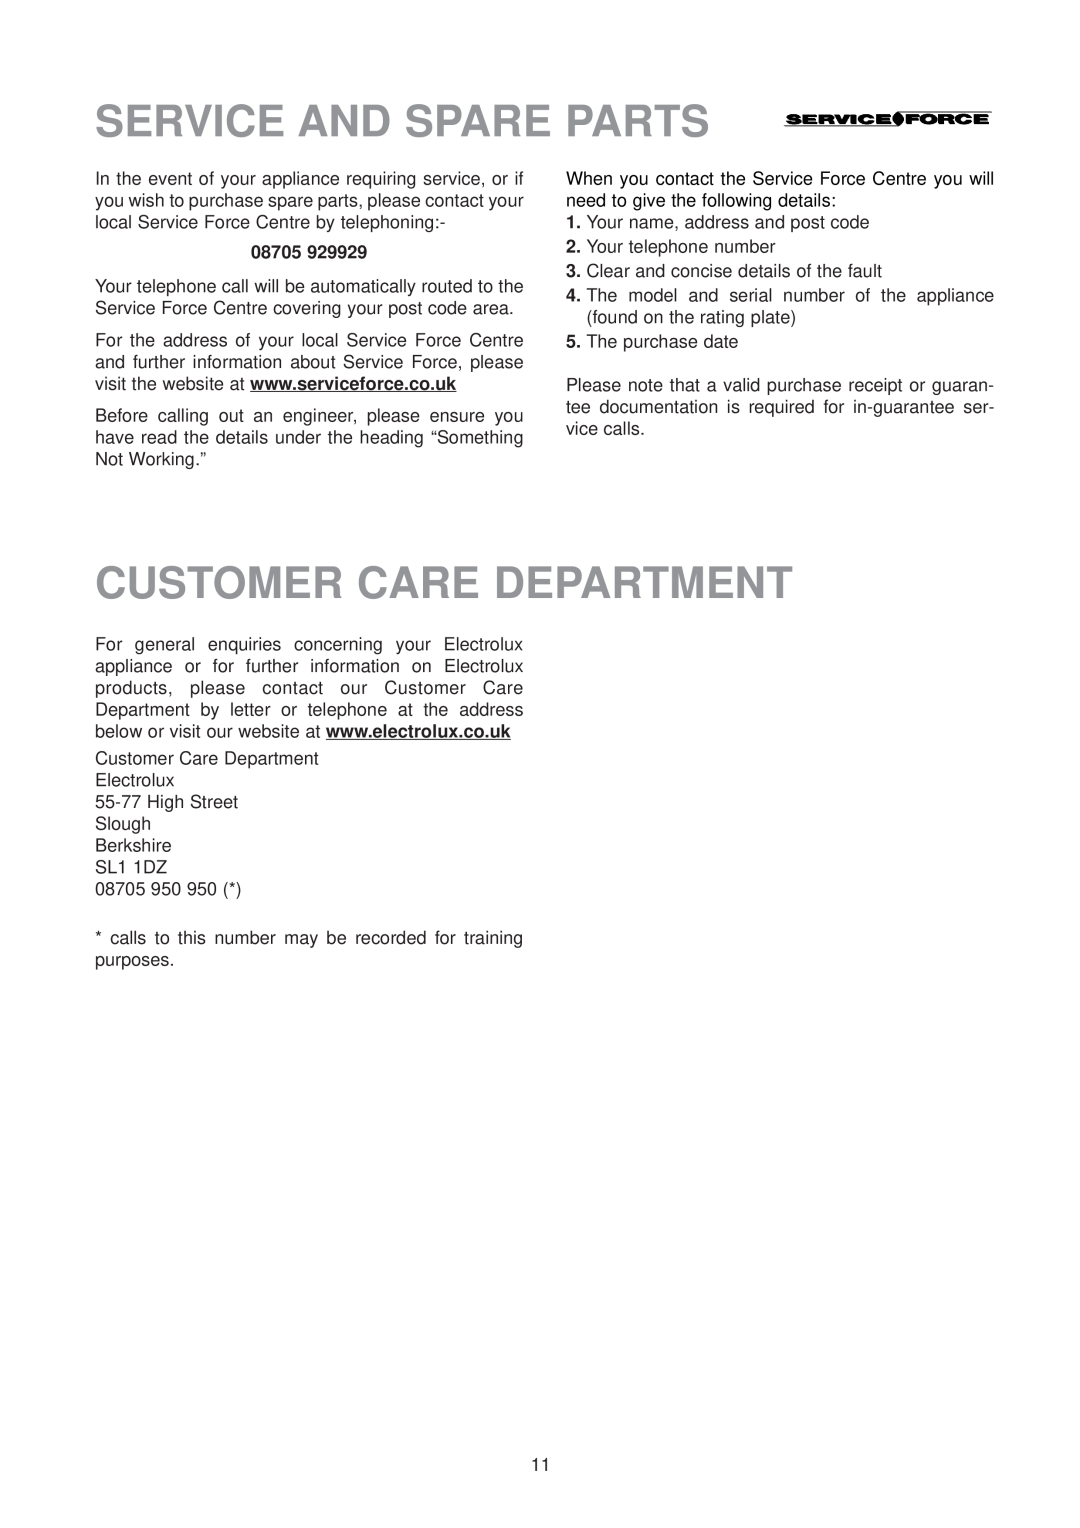 Electrolux EUU 6174, EUU 1172 manual Service And Spare Parts, Customer Care Department 